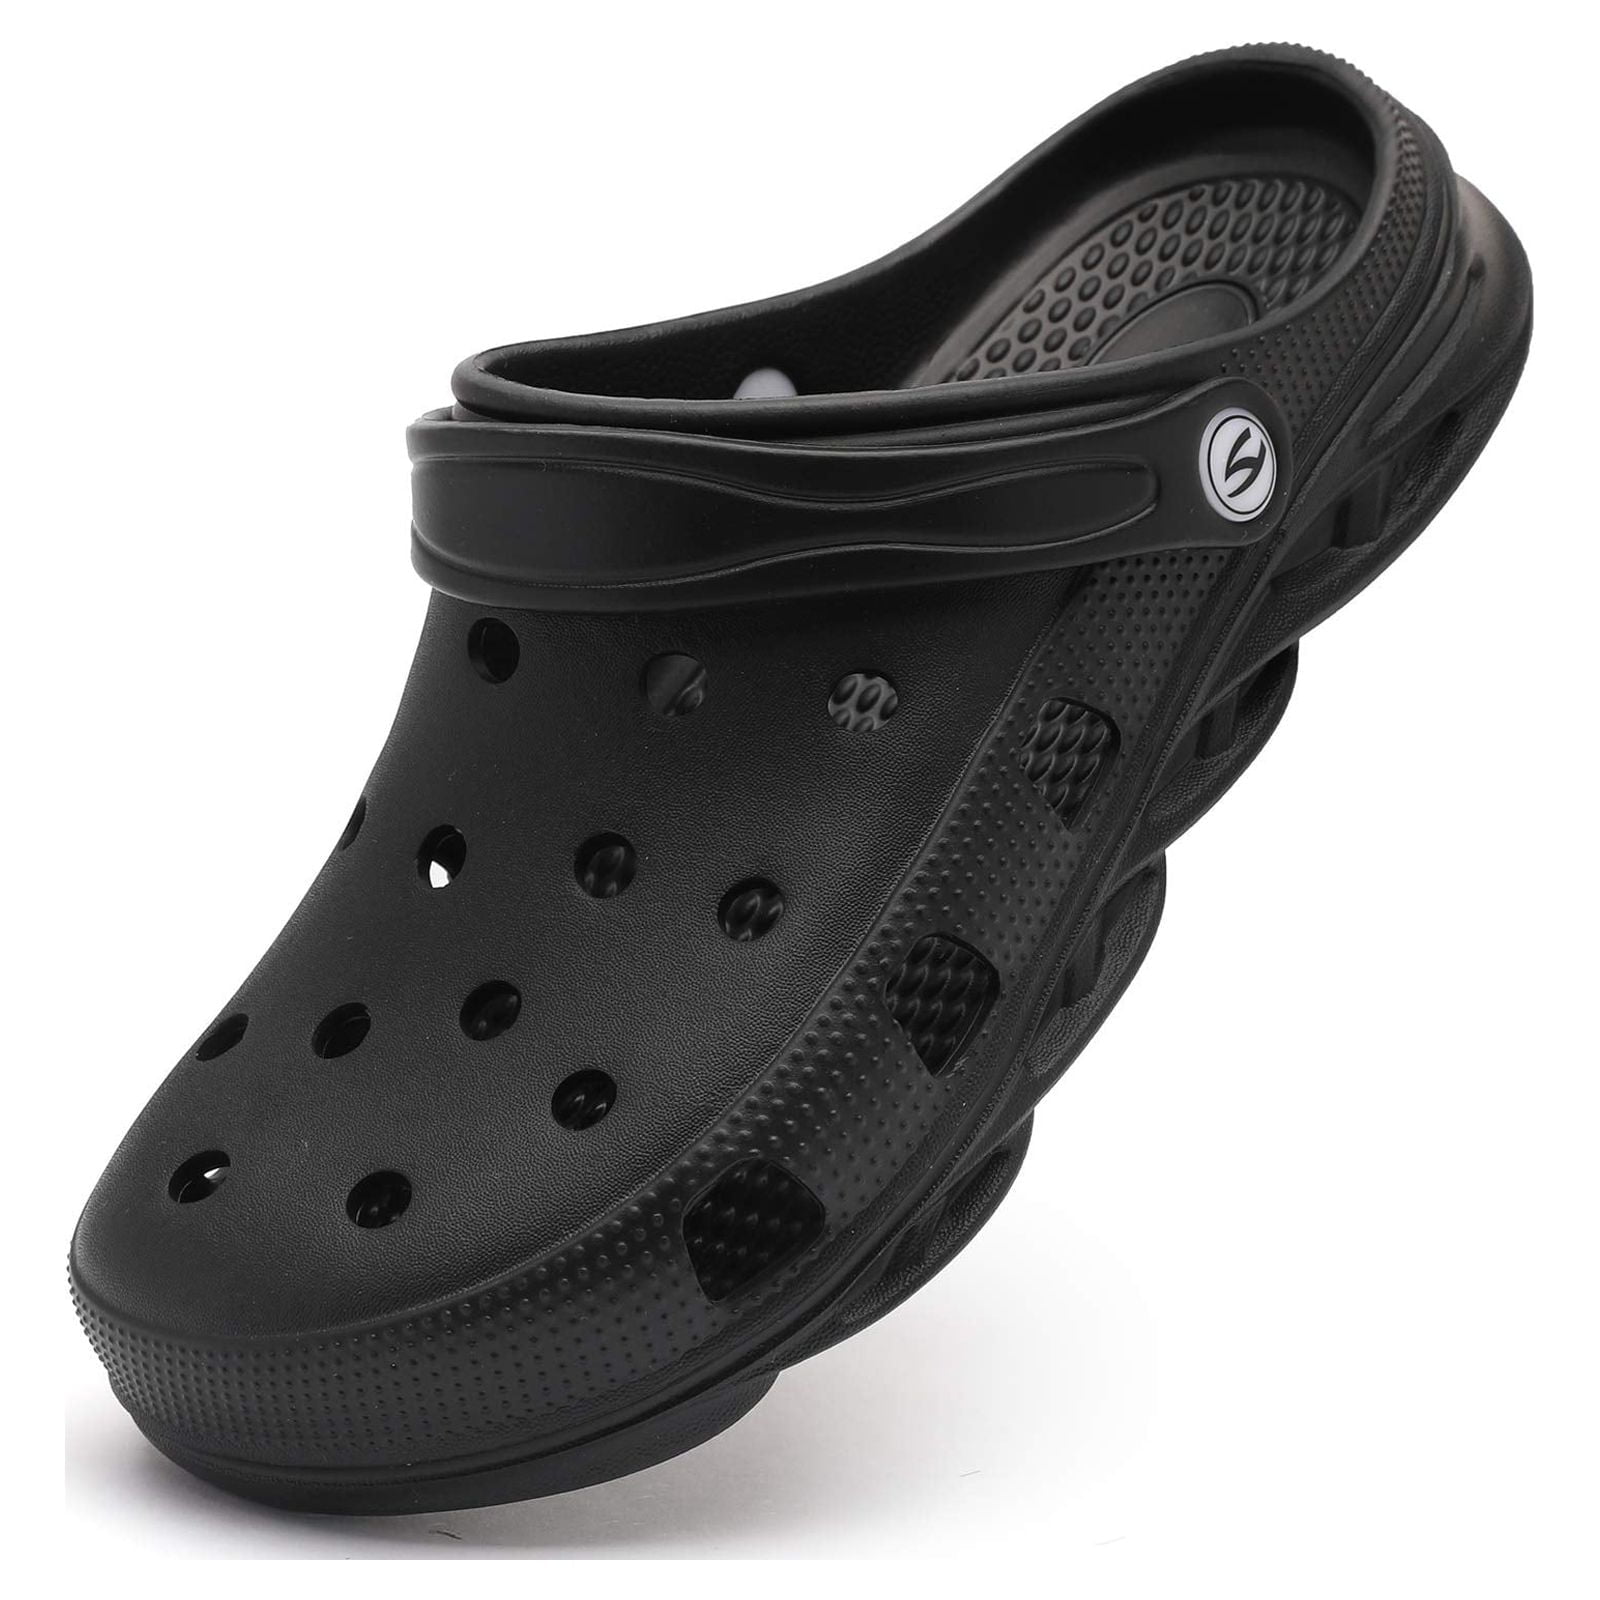 Unisex Garden Clogs Shoes Slippers Sandals for Women and Men Black,Men ...